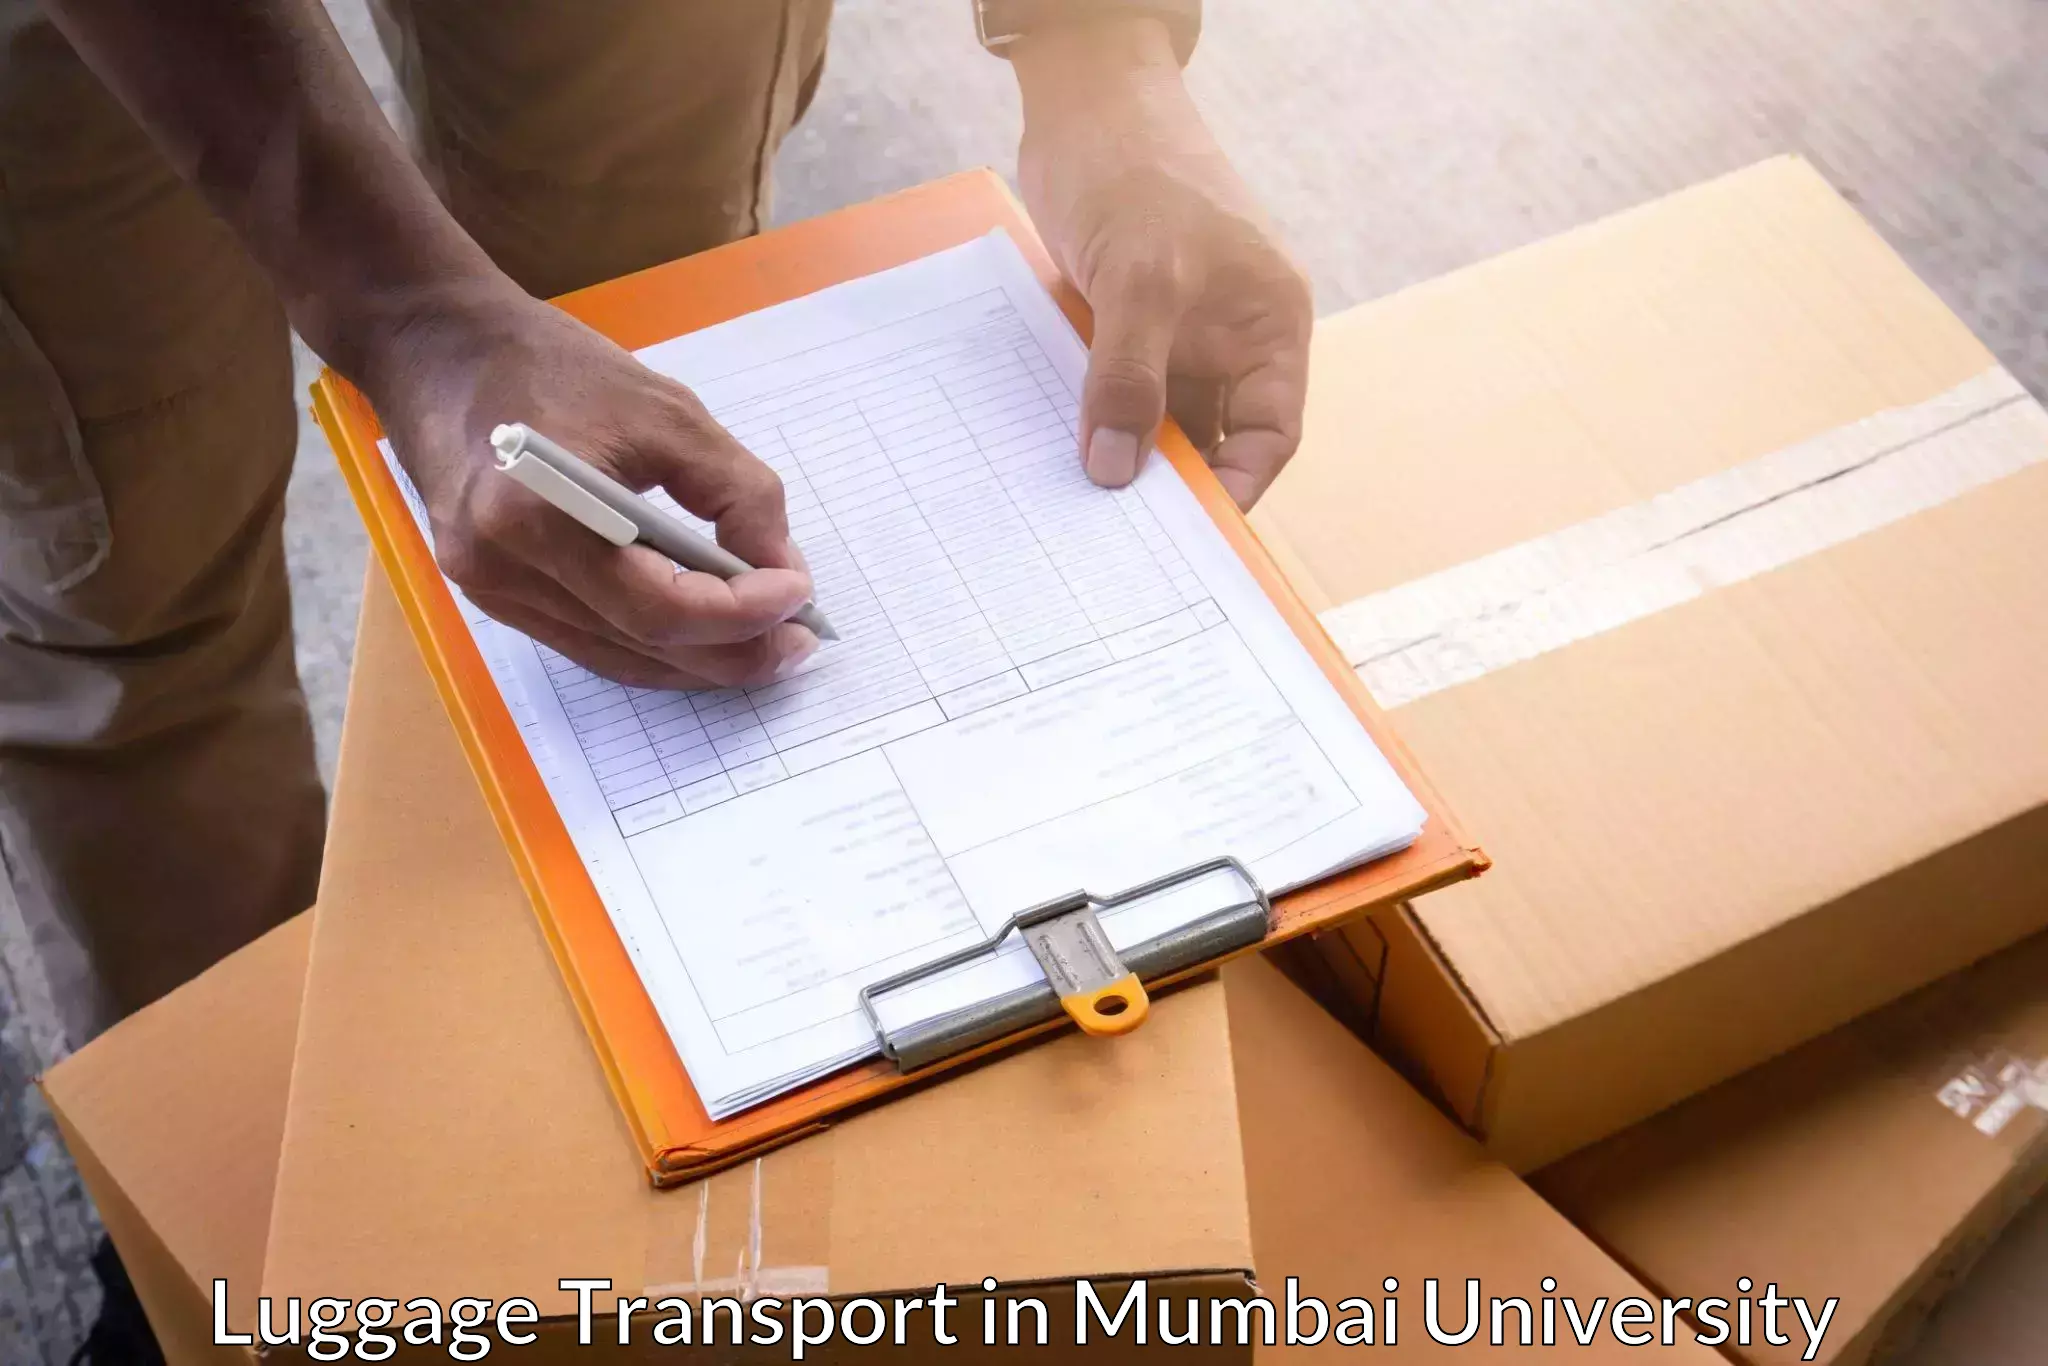 Luggage transport service in Mumbai University